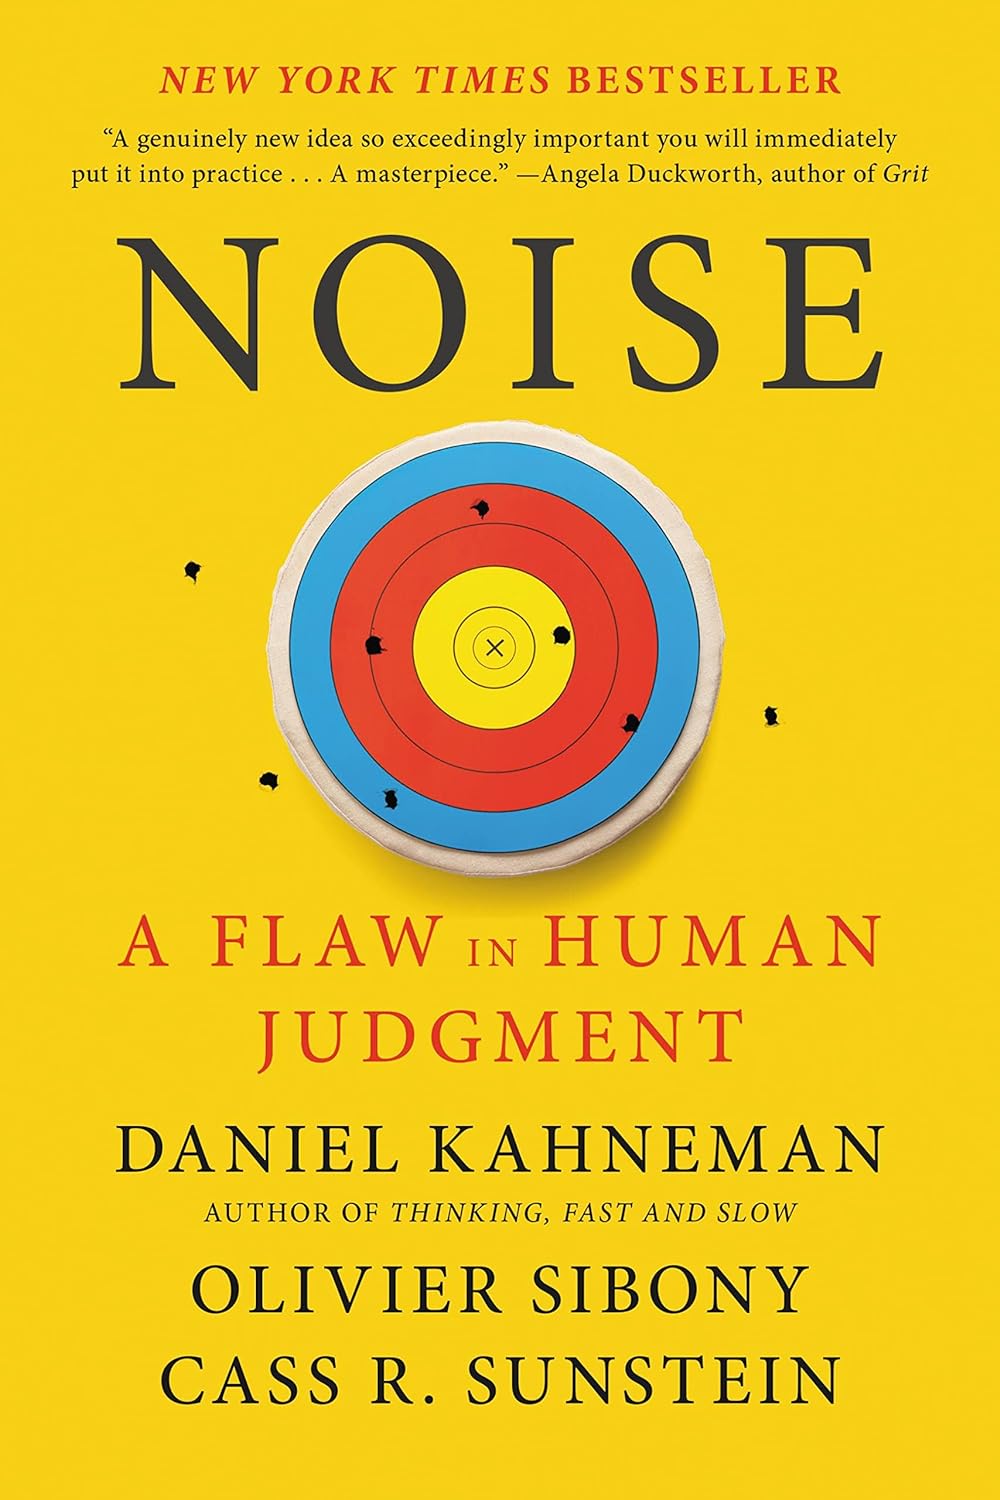 Daniel Kahneman, Cass R. Sunstein, Olivier Sibony: Noise: A Flaw in Human Judgment (2021, Little, Brown Spark)